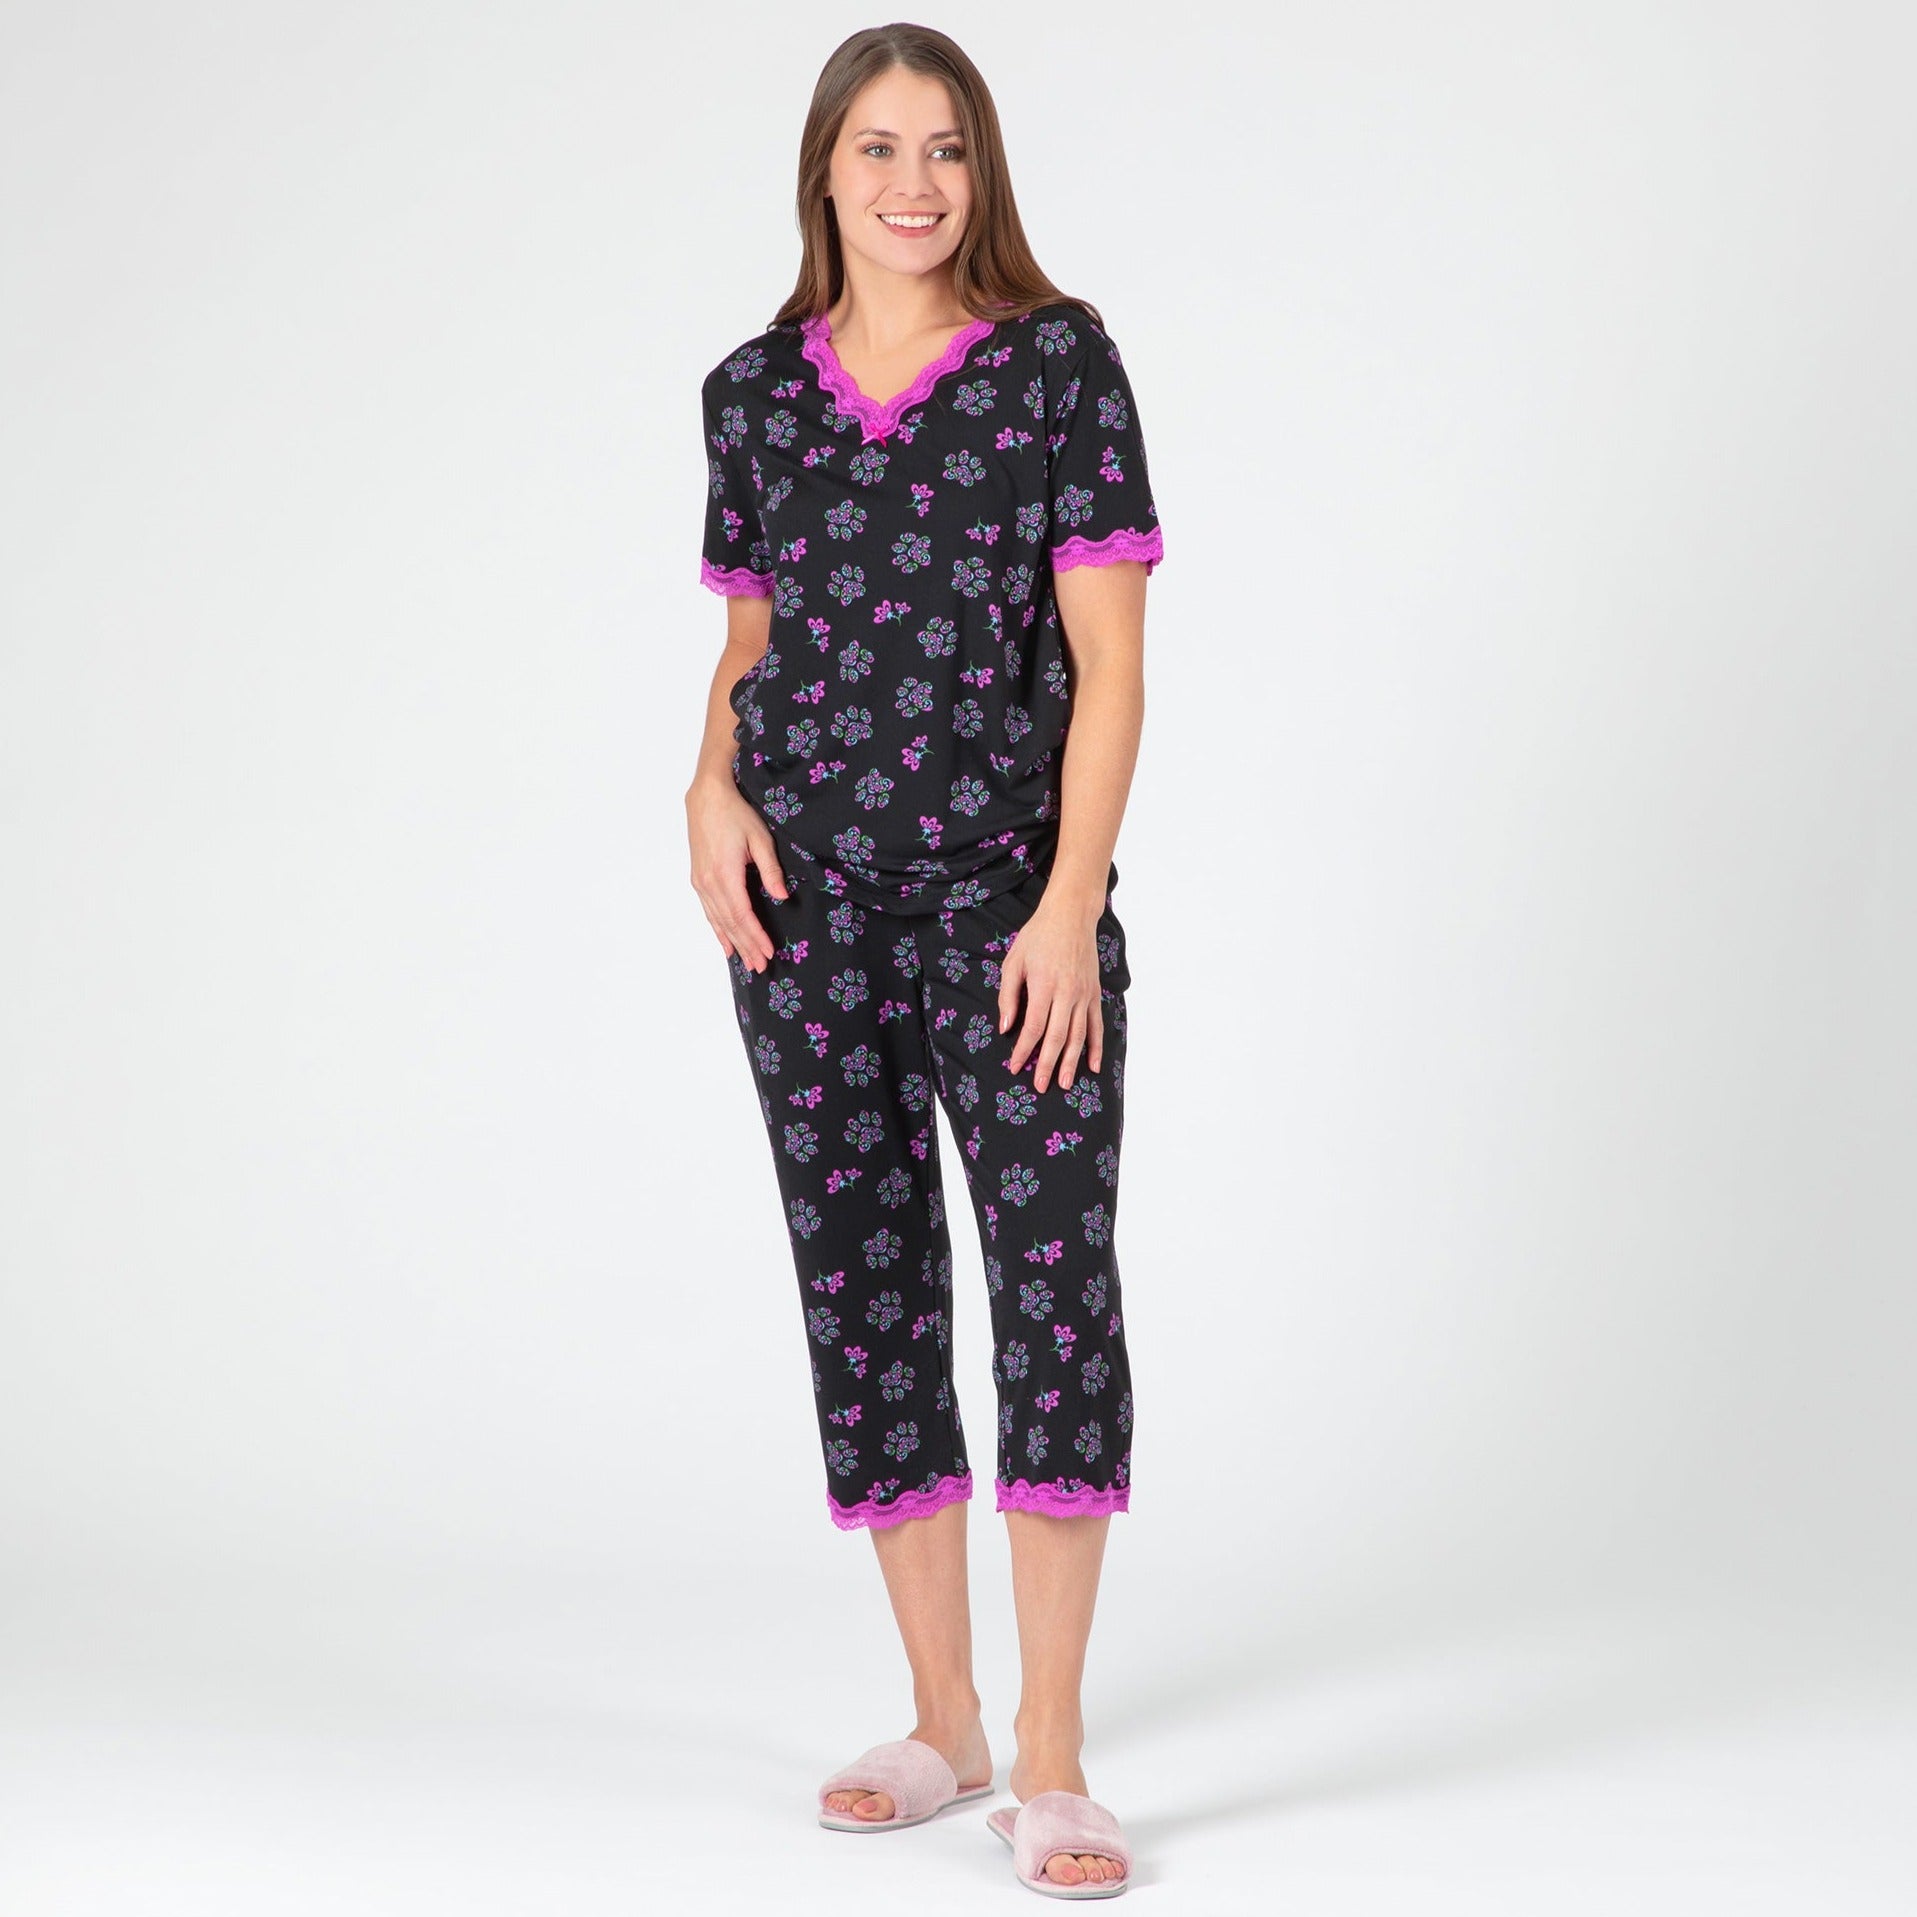 Flowers & Swirls Paw Prints Soft Touch Pajamas - V-Neck & Capri Set - S